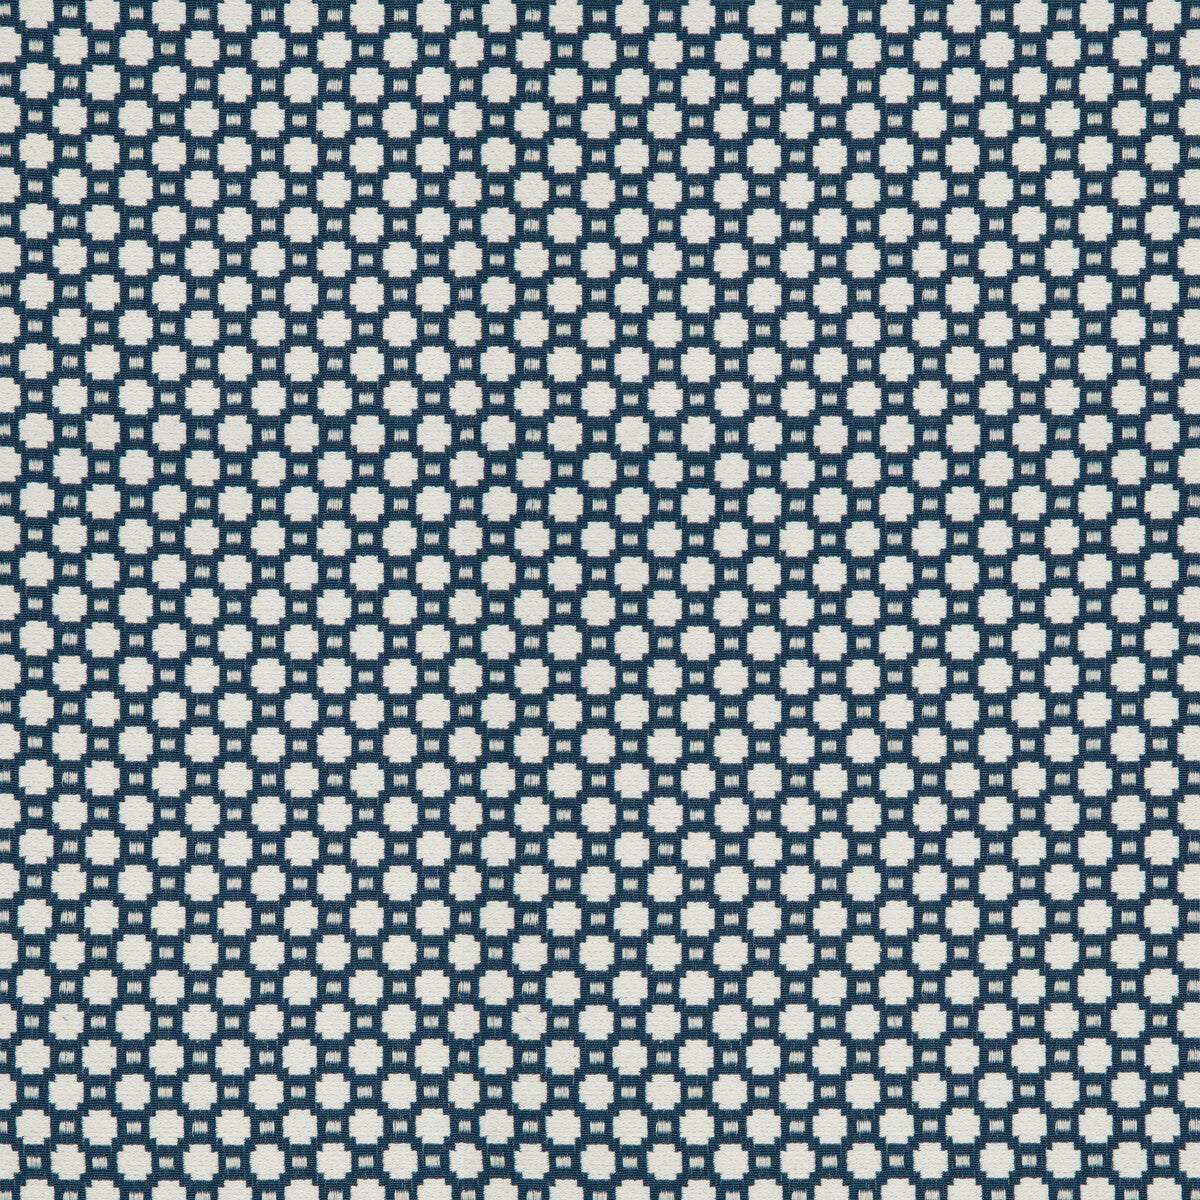 Kravet Smart fabric in 35935-51 color - pattern 35935.51.0 - by Kravet Smart in the Performance Kravetarmor collection